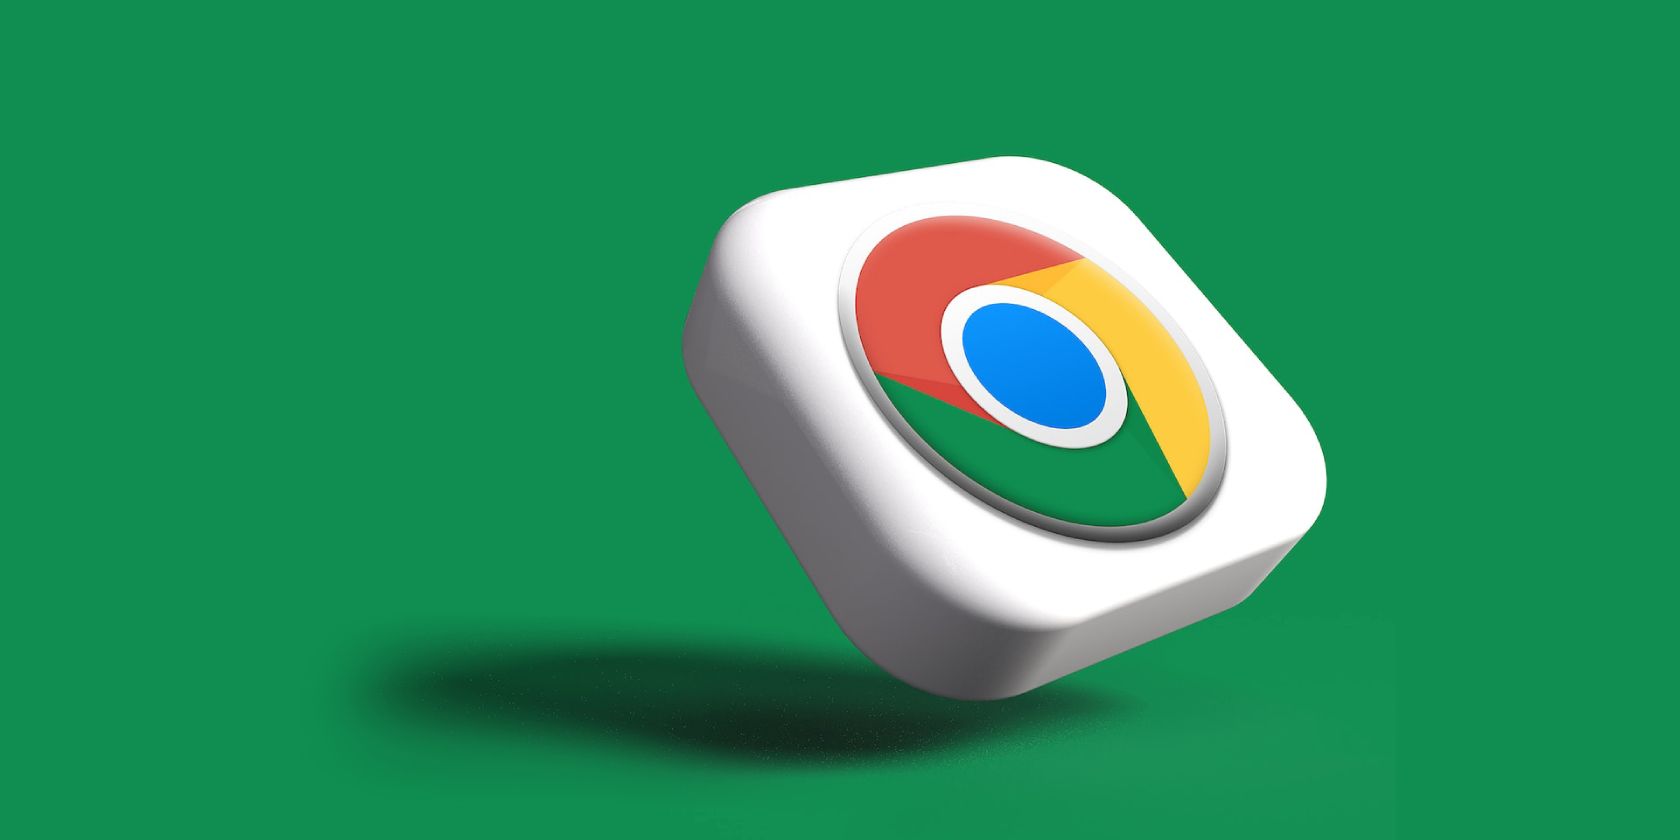 Google Chrome logo against a green backdrop